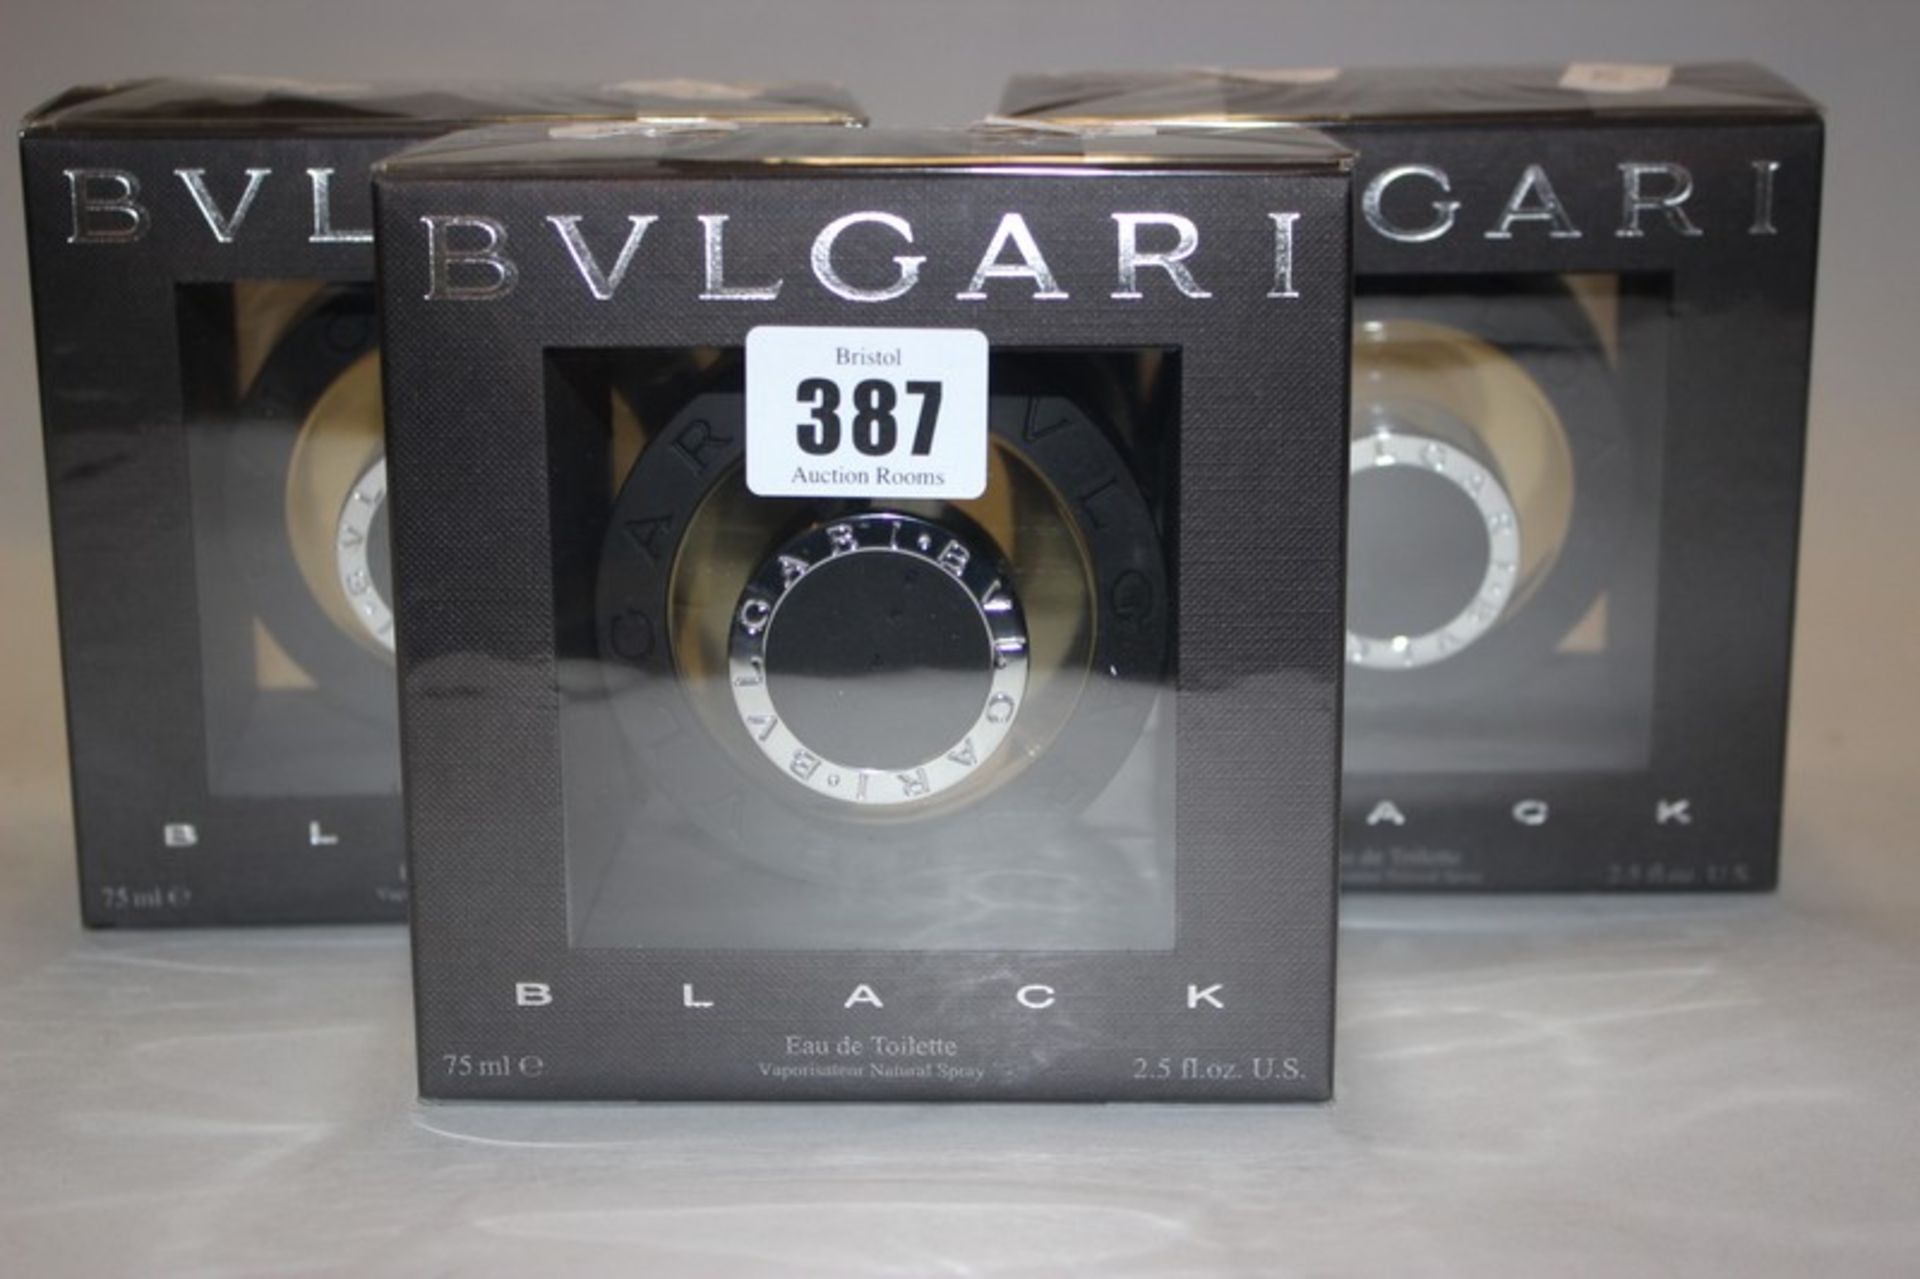 Five Bvlgari Black eau de toilette (75ml).